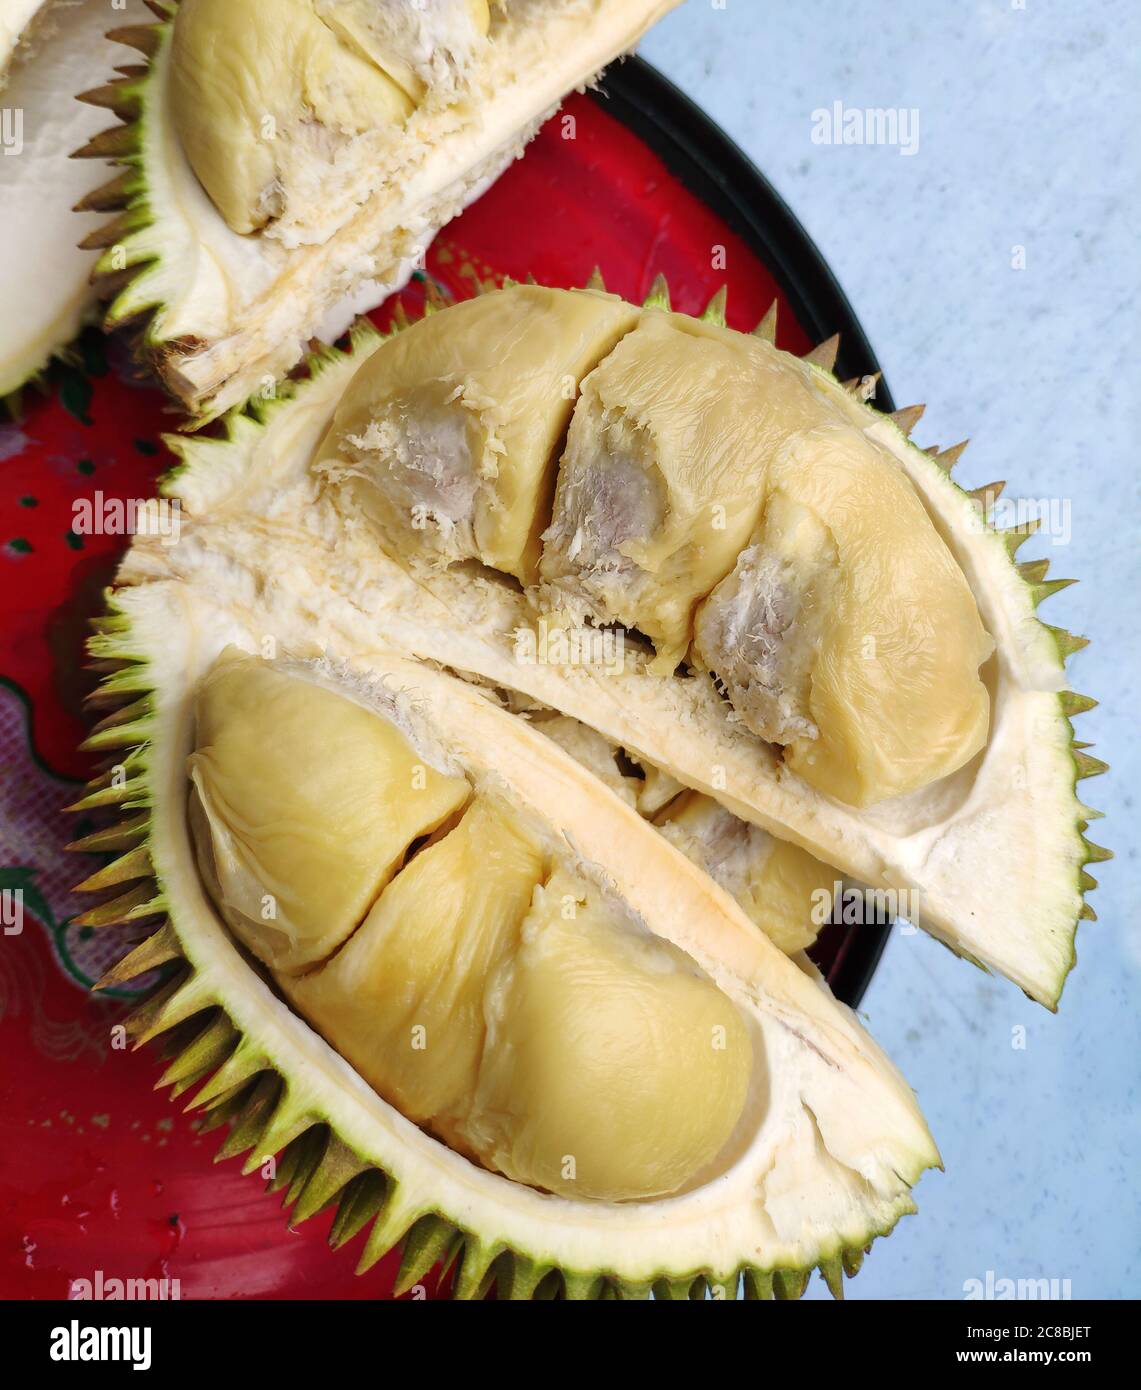 Durian pulp